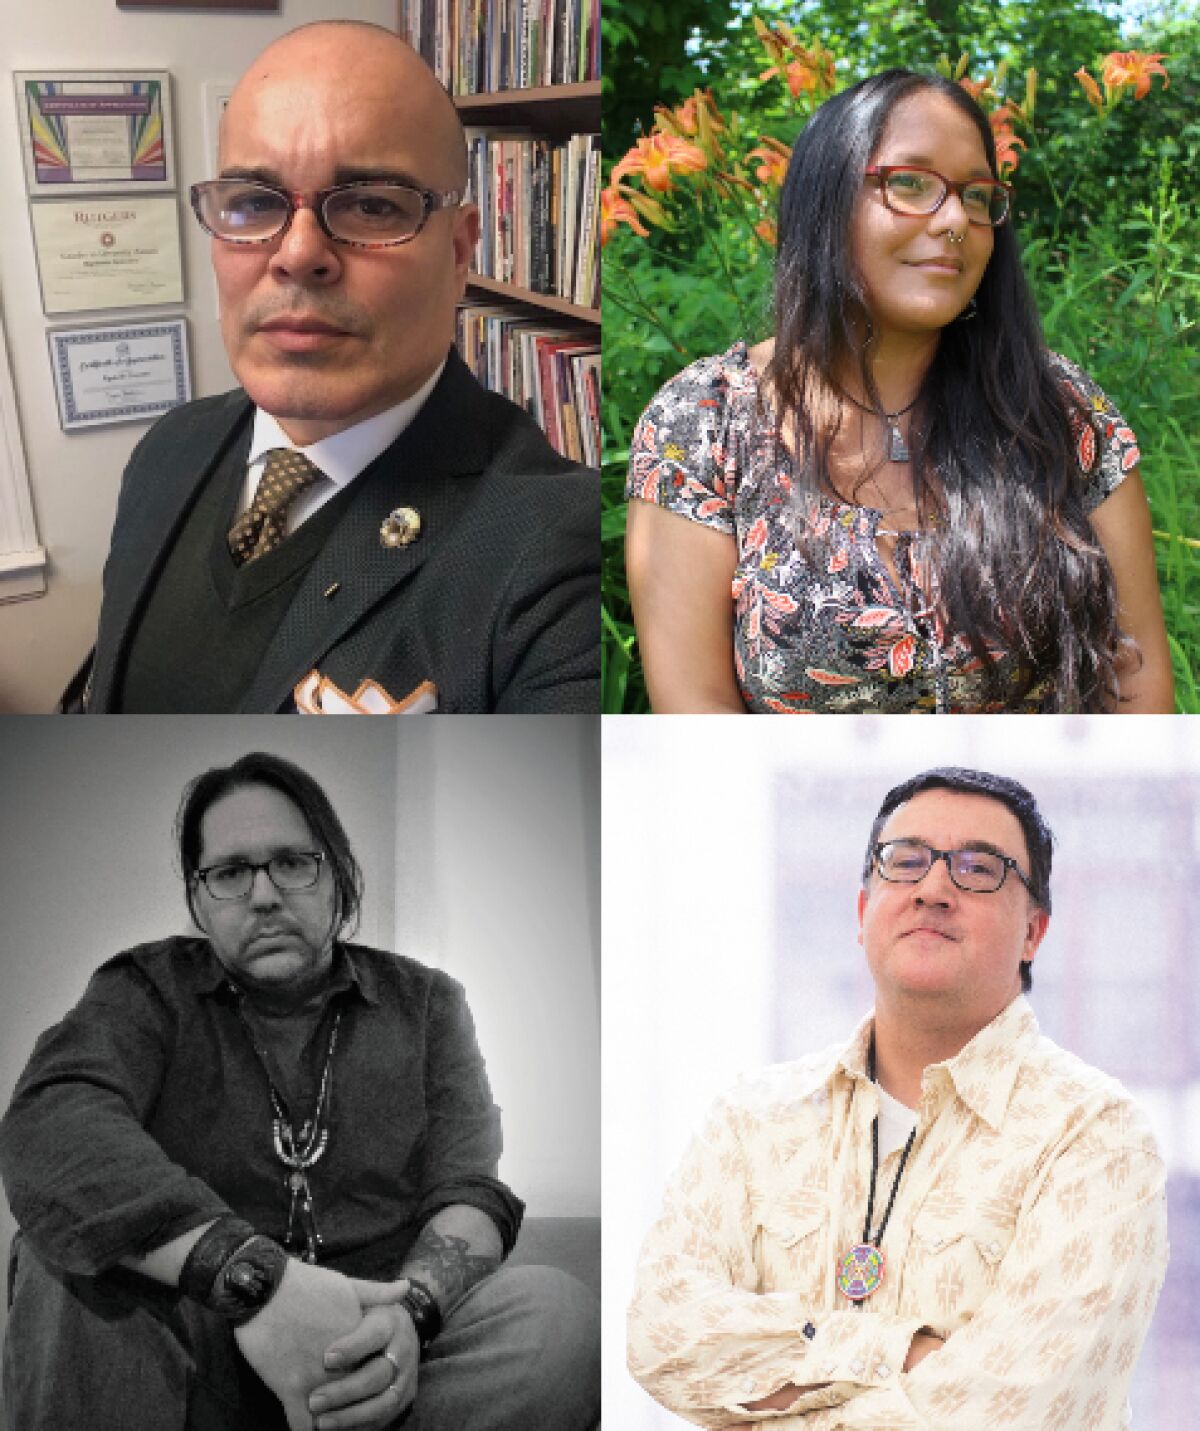 Portraits of Rigoberto González, Danielle Geller, David Heska Wanbli Weiden and Brandon Hobson.